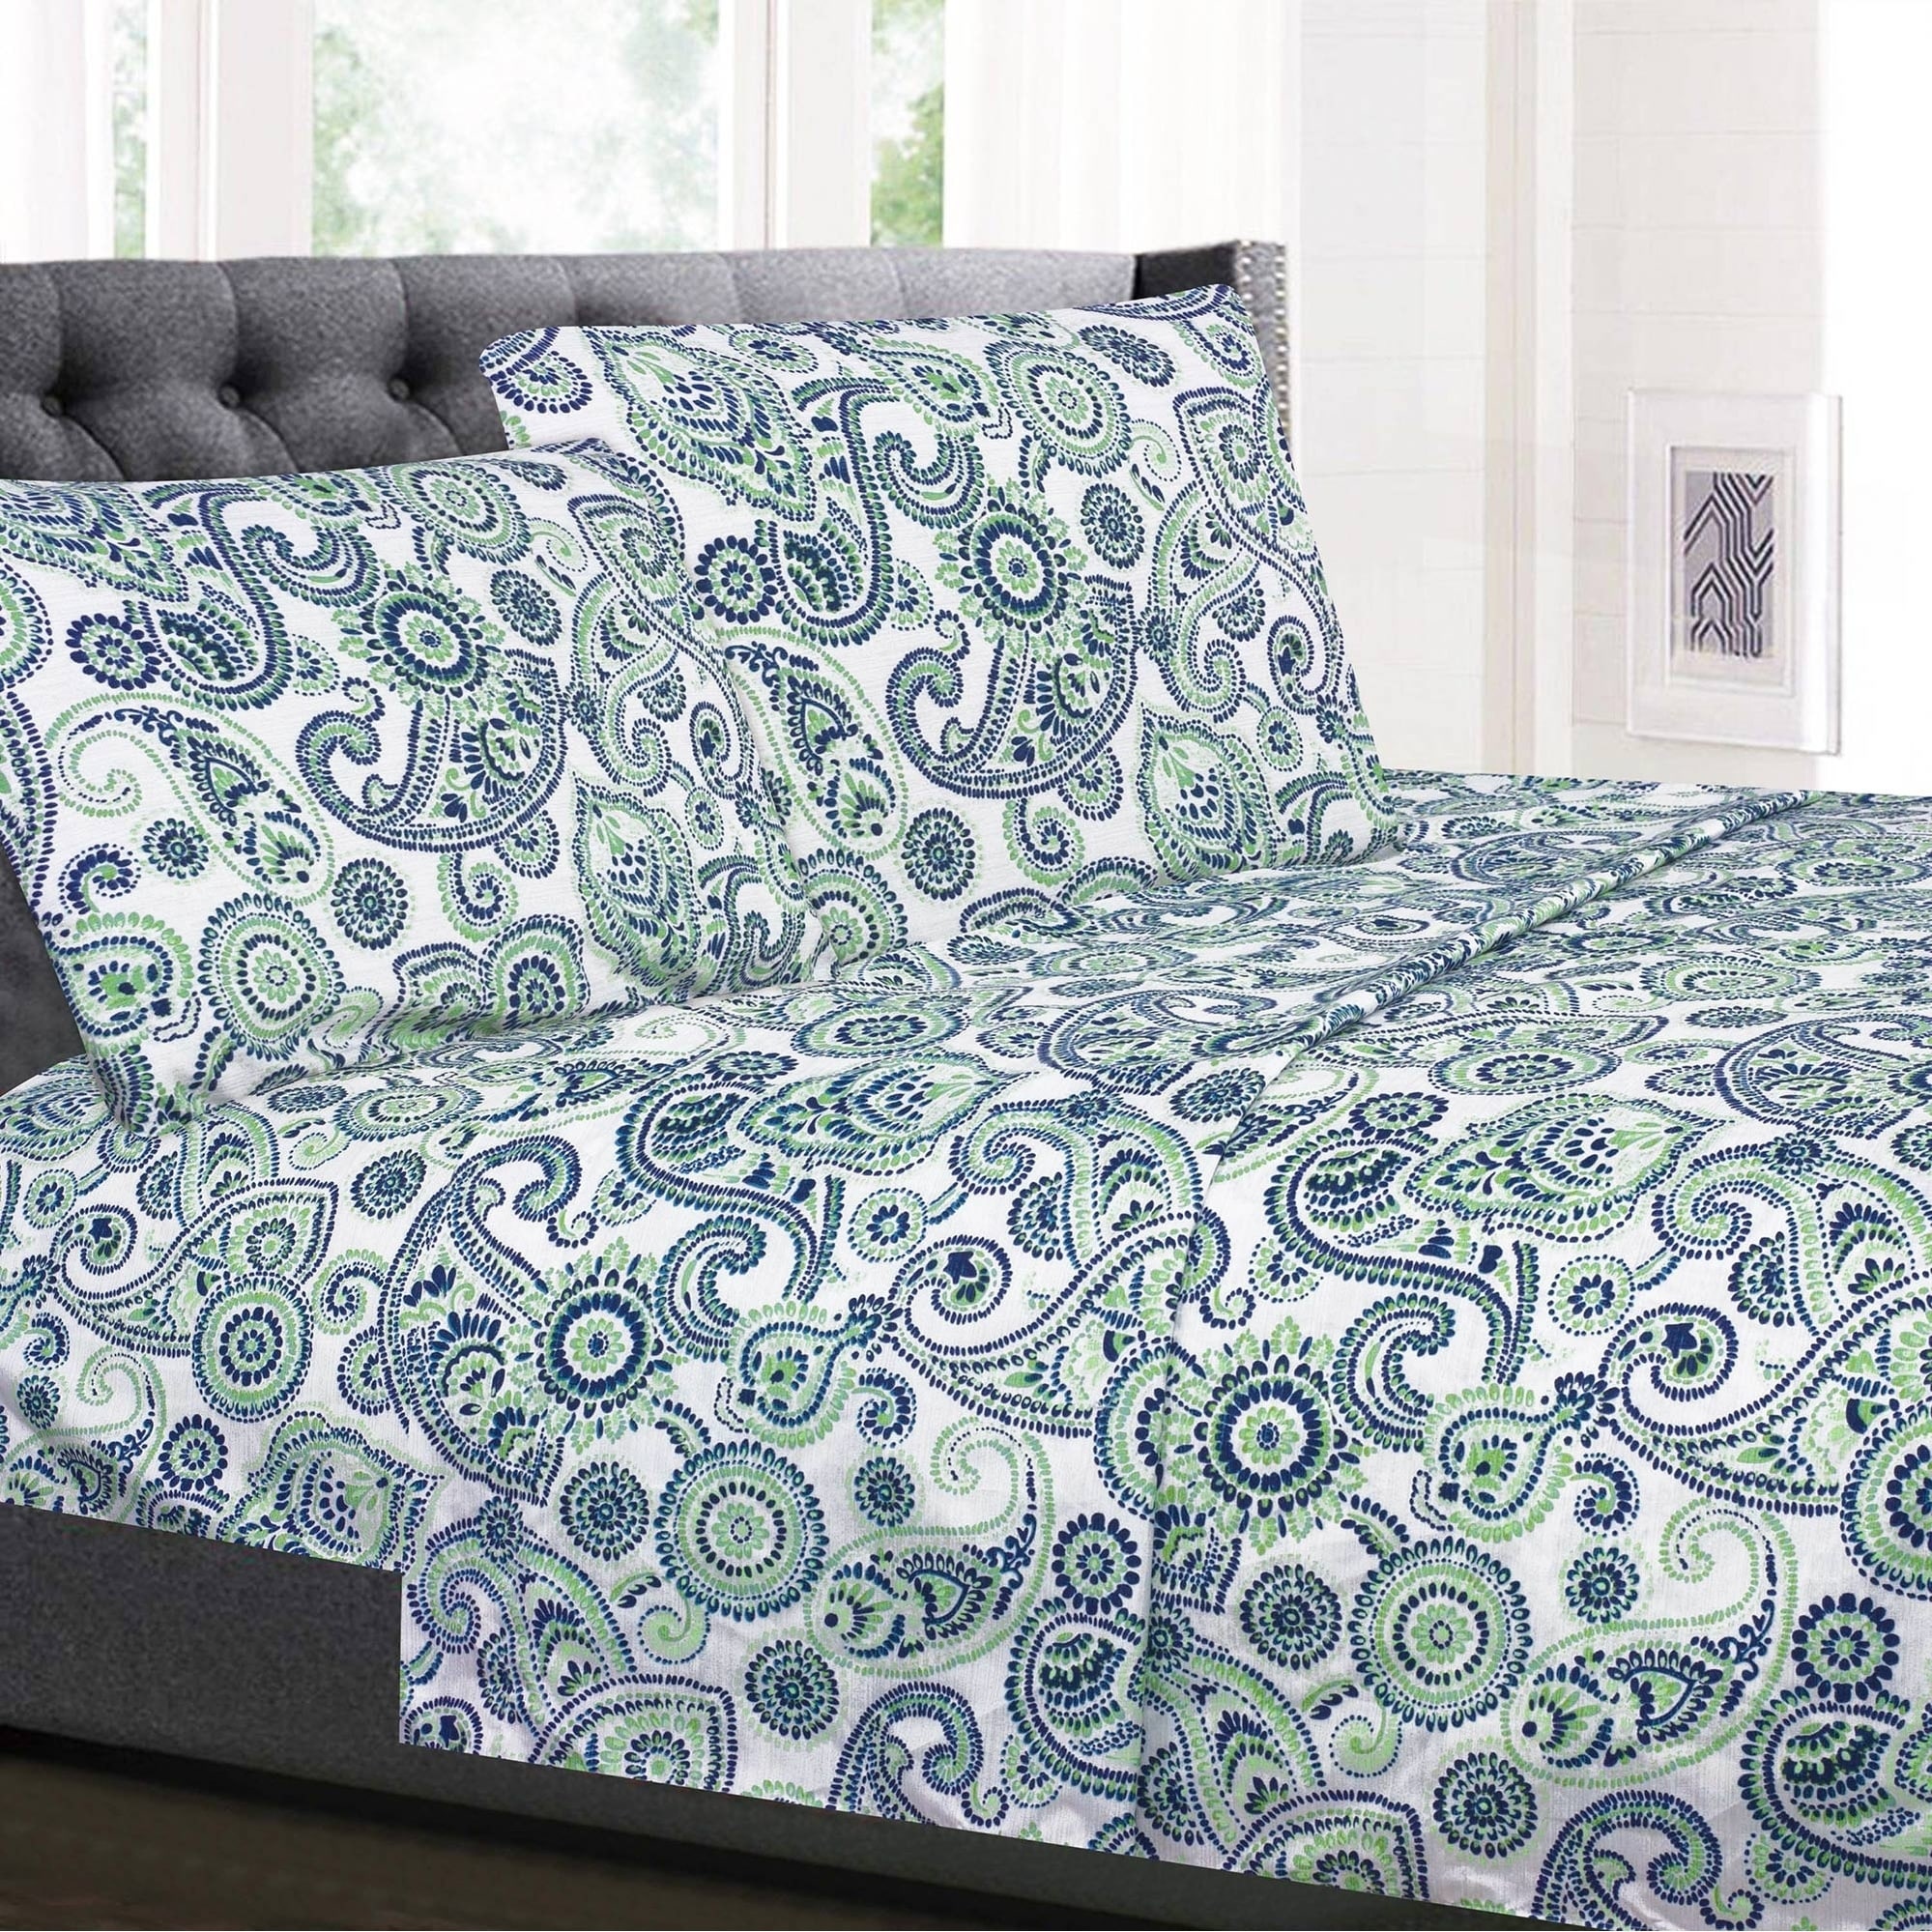 patterned king size flat sheets